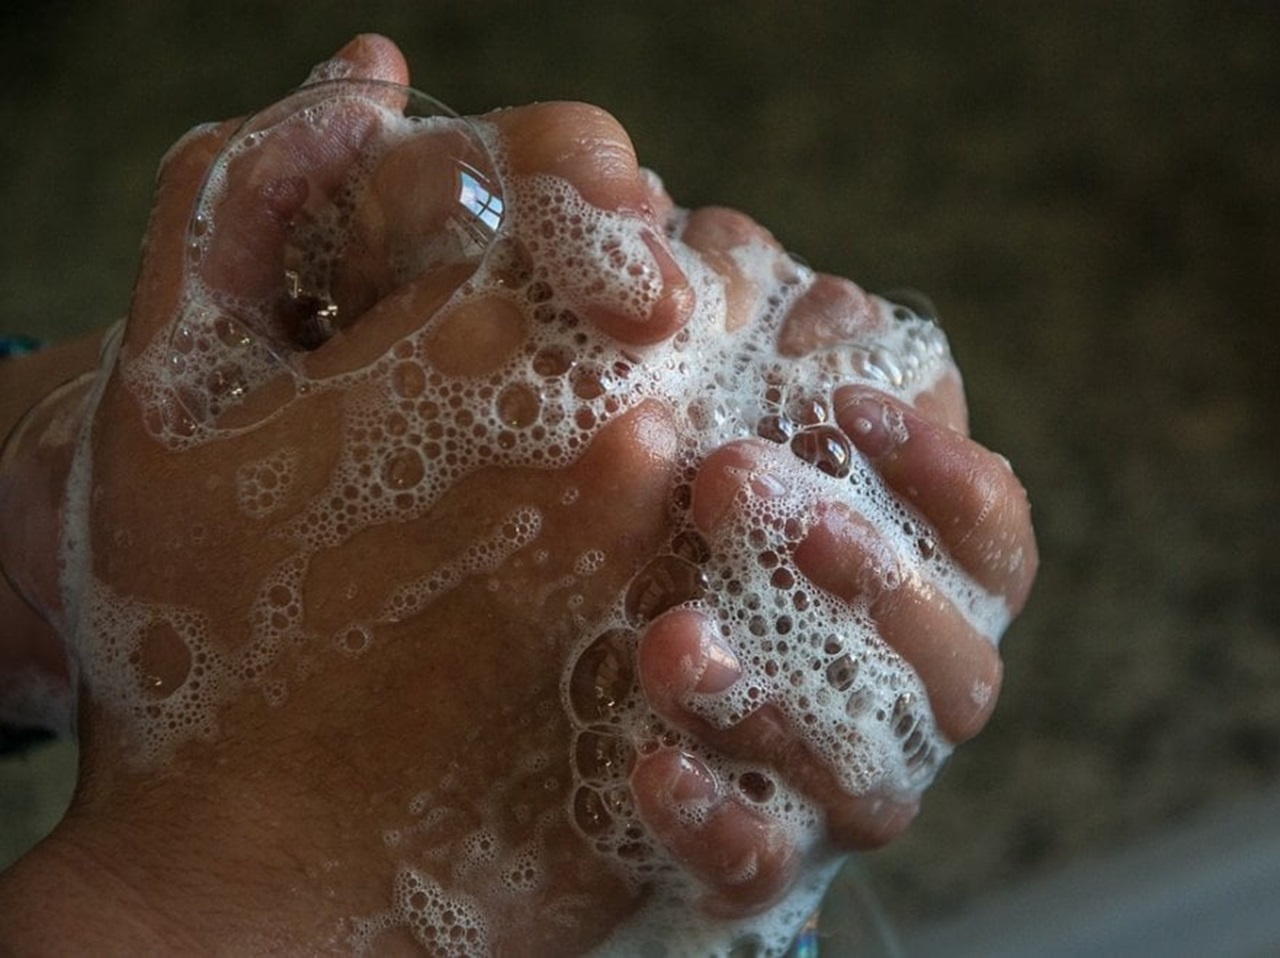 lavarsi le mani, mani insaponate